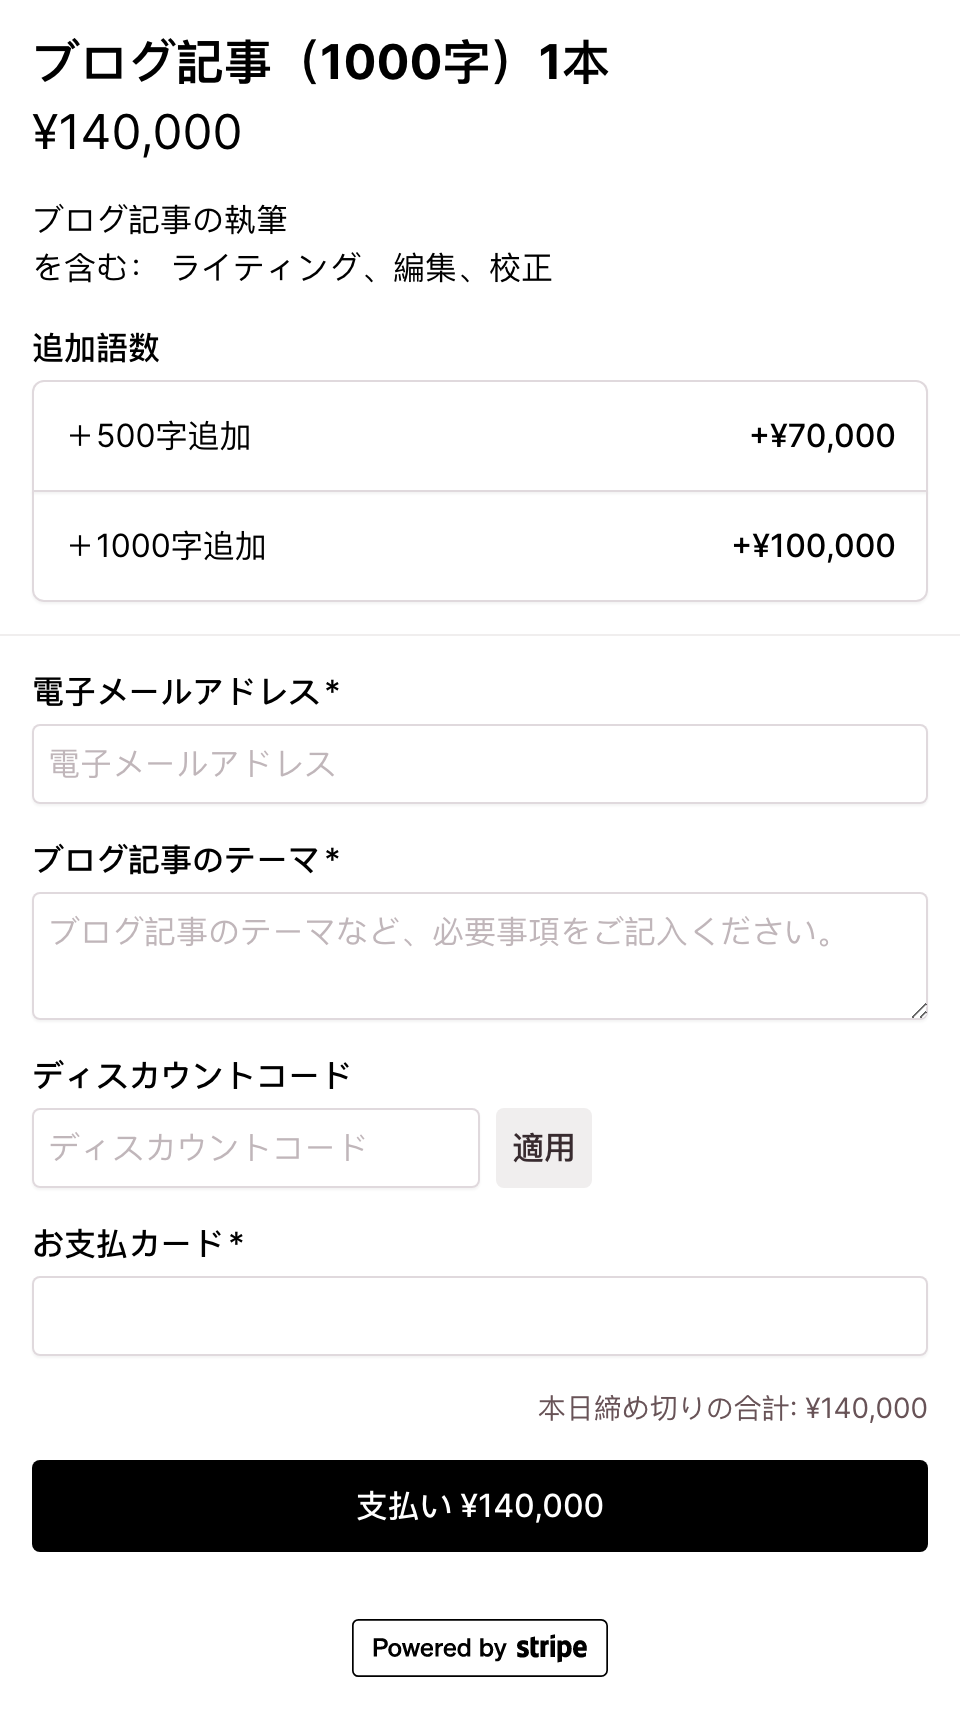 Japanese - Translated checkout form